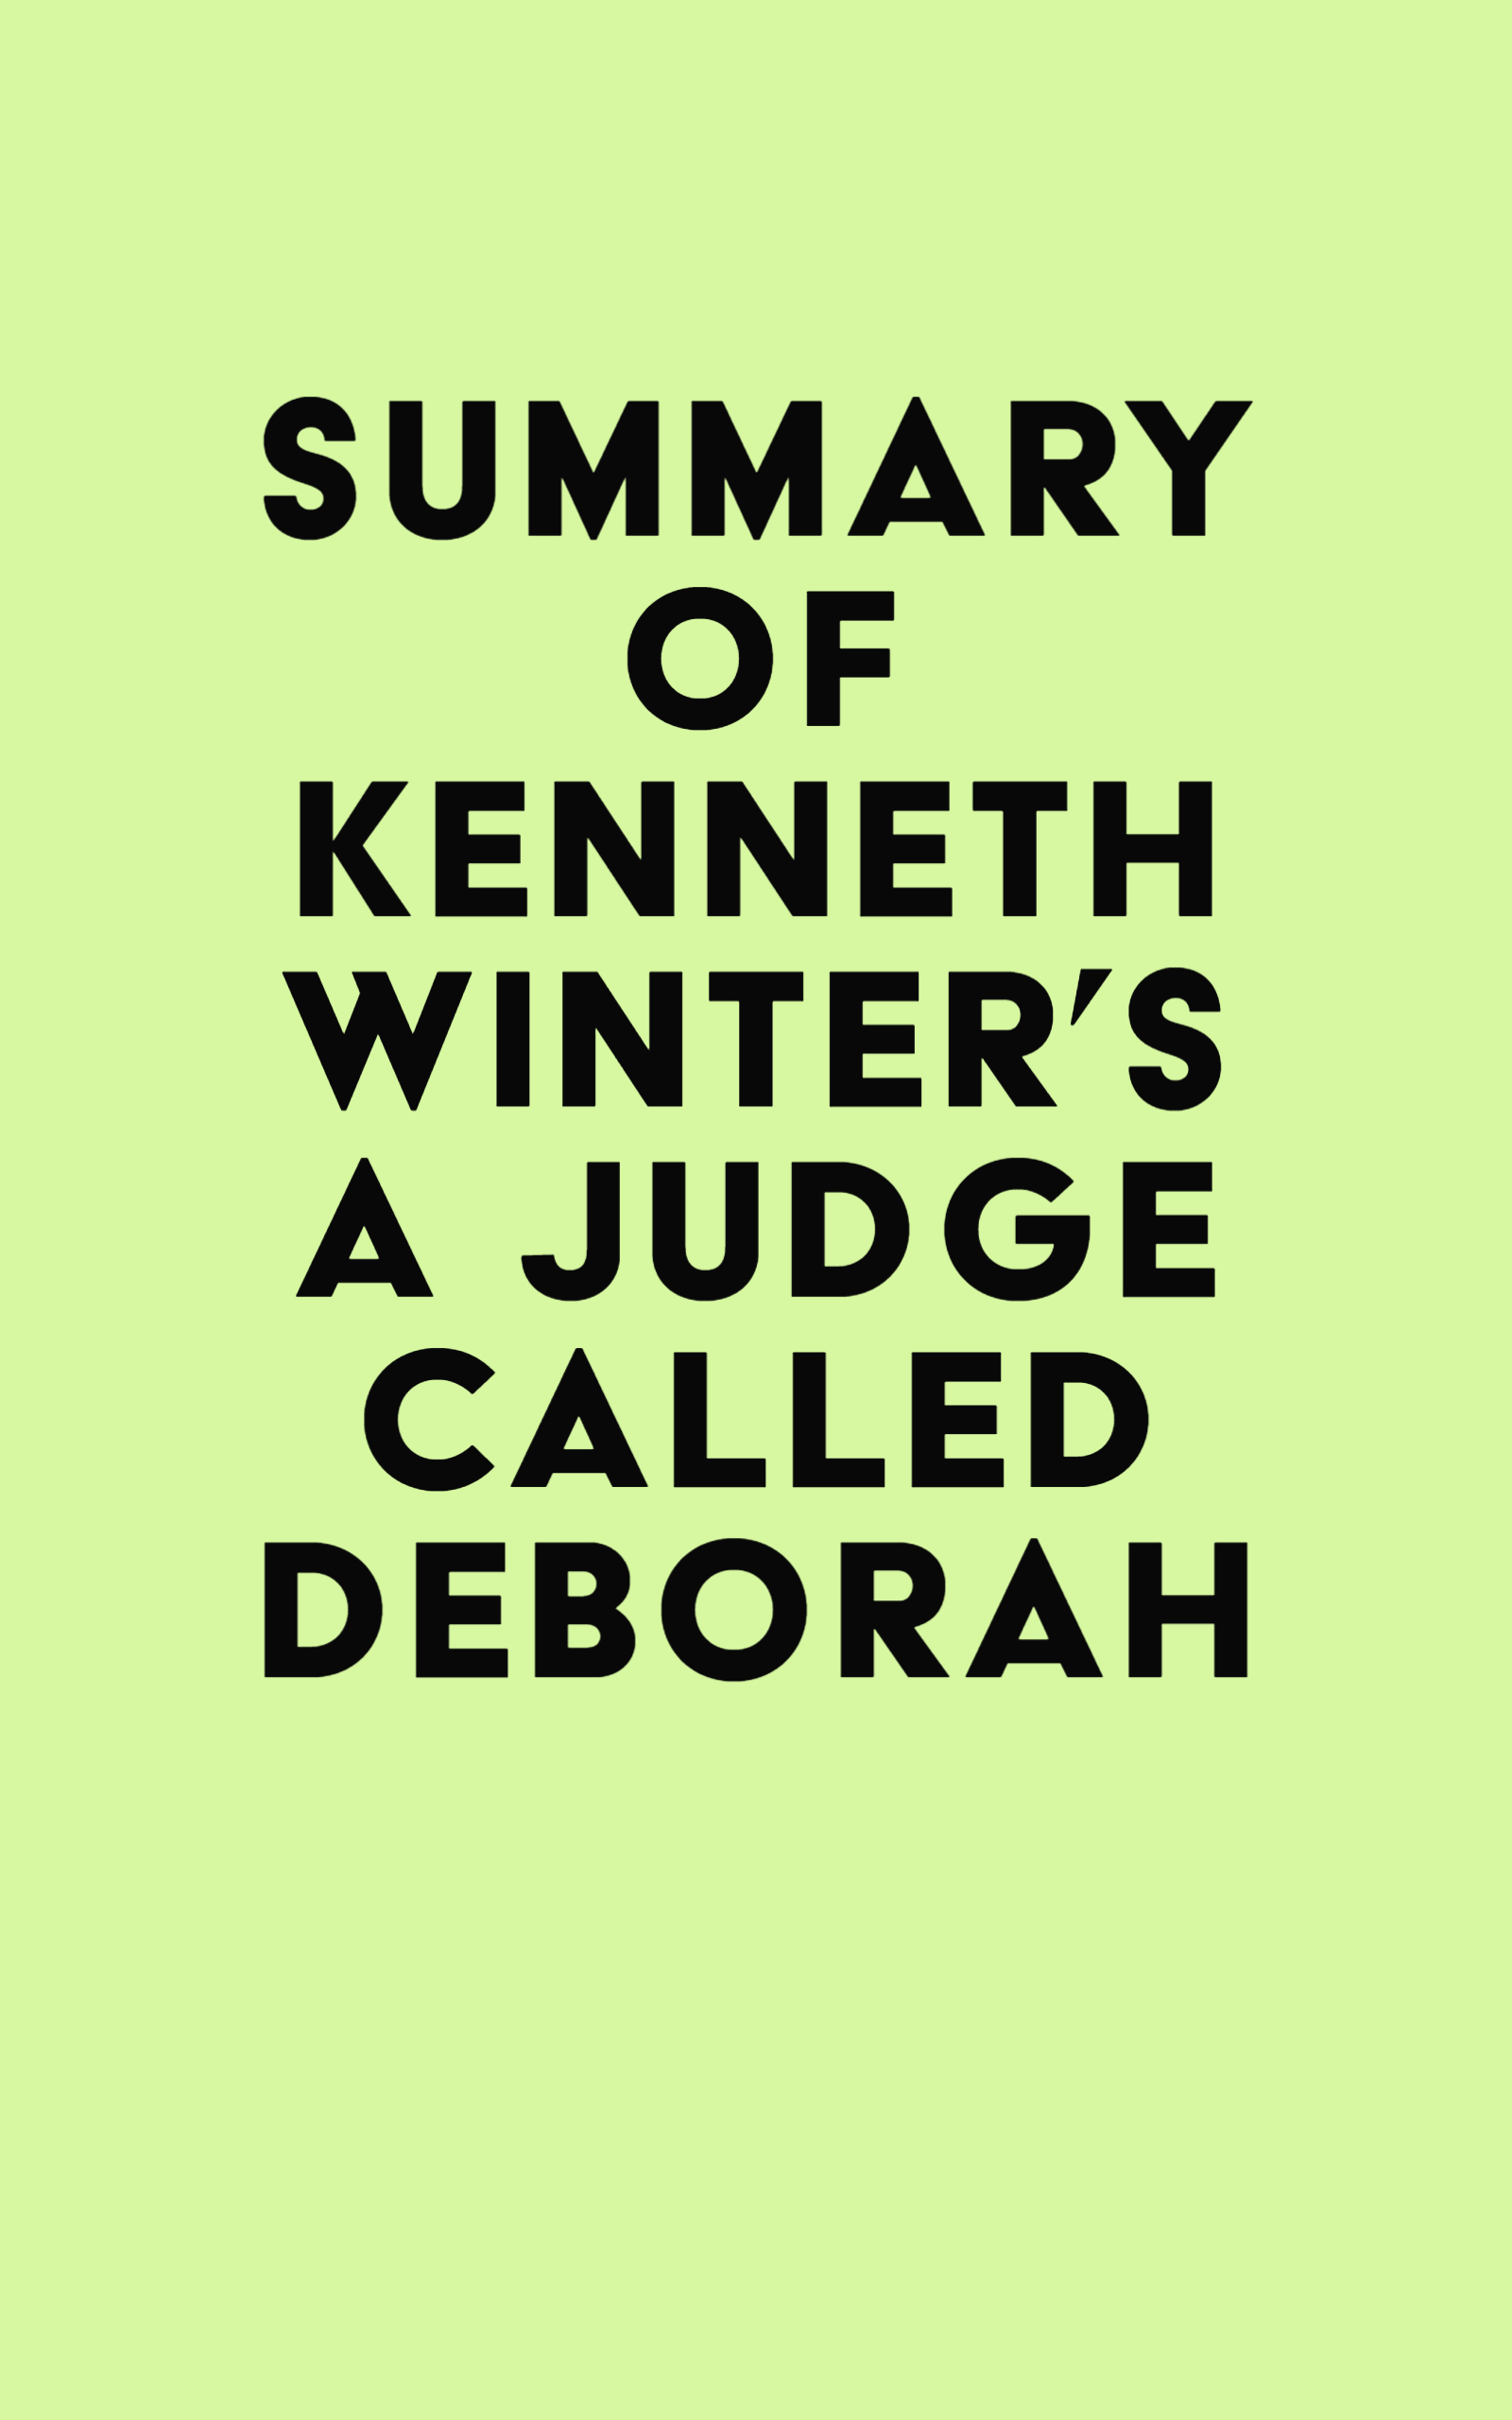 Summary of Kenneth Winter's A Judge Called Deborah